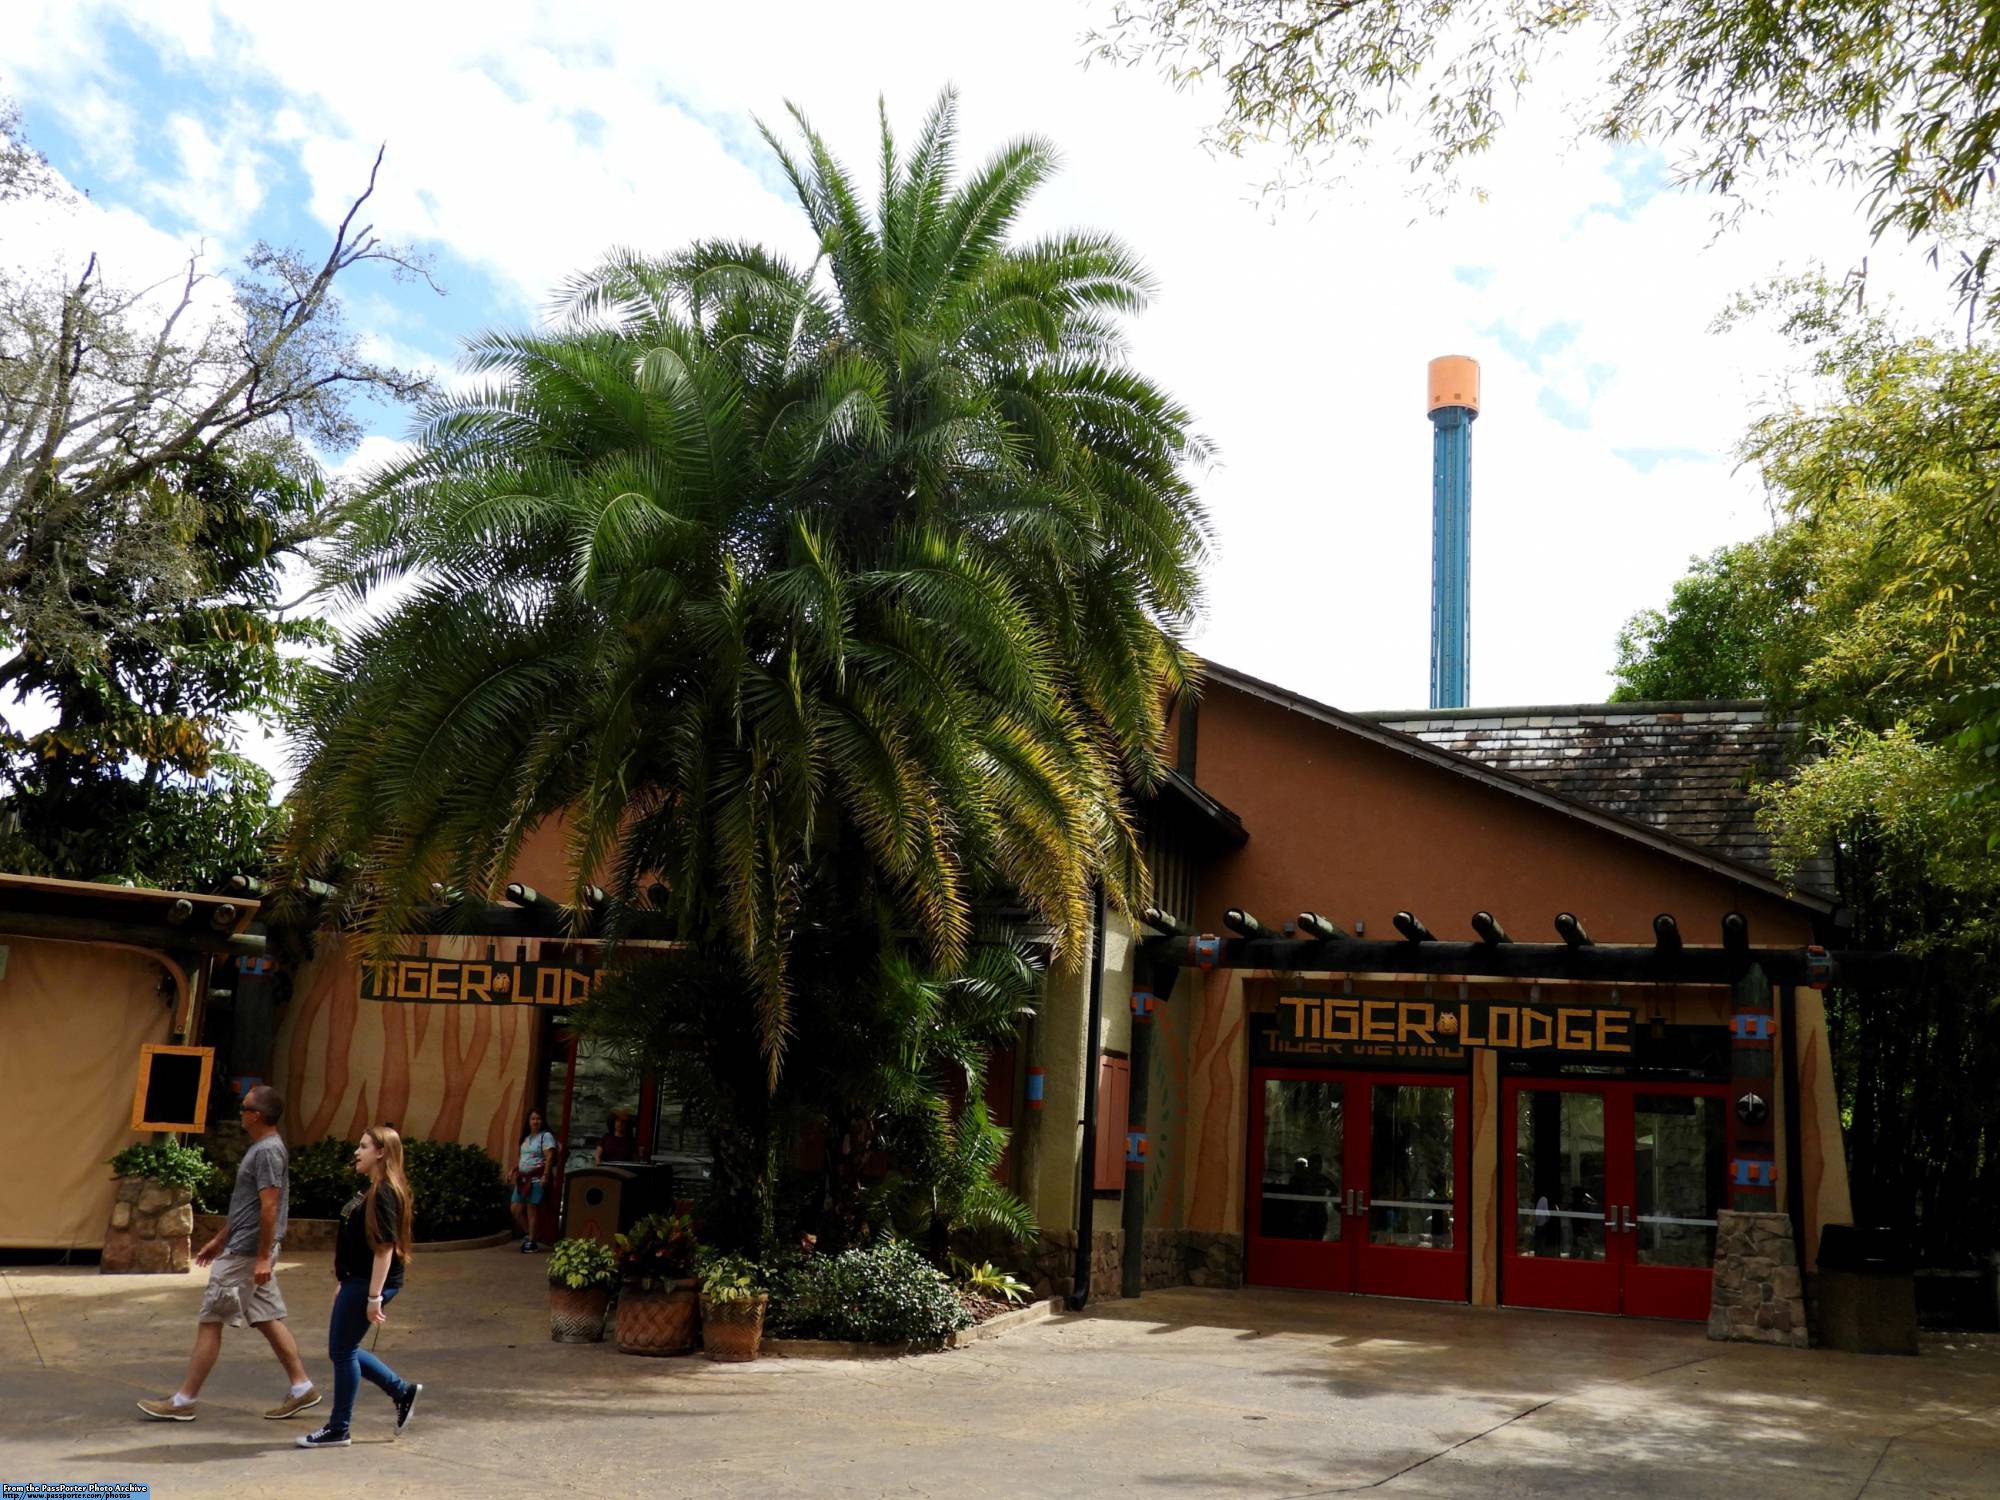 Busch Gardens - Tiger Lodge and Trail